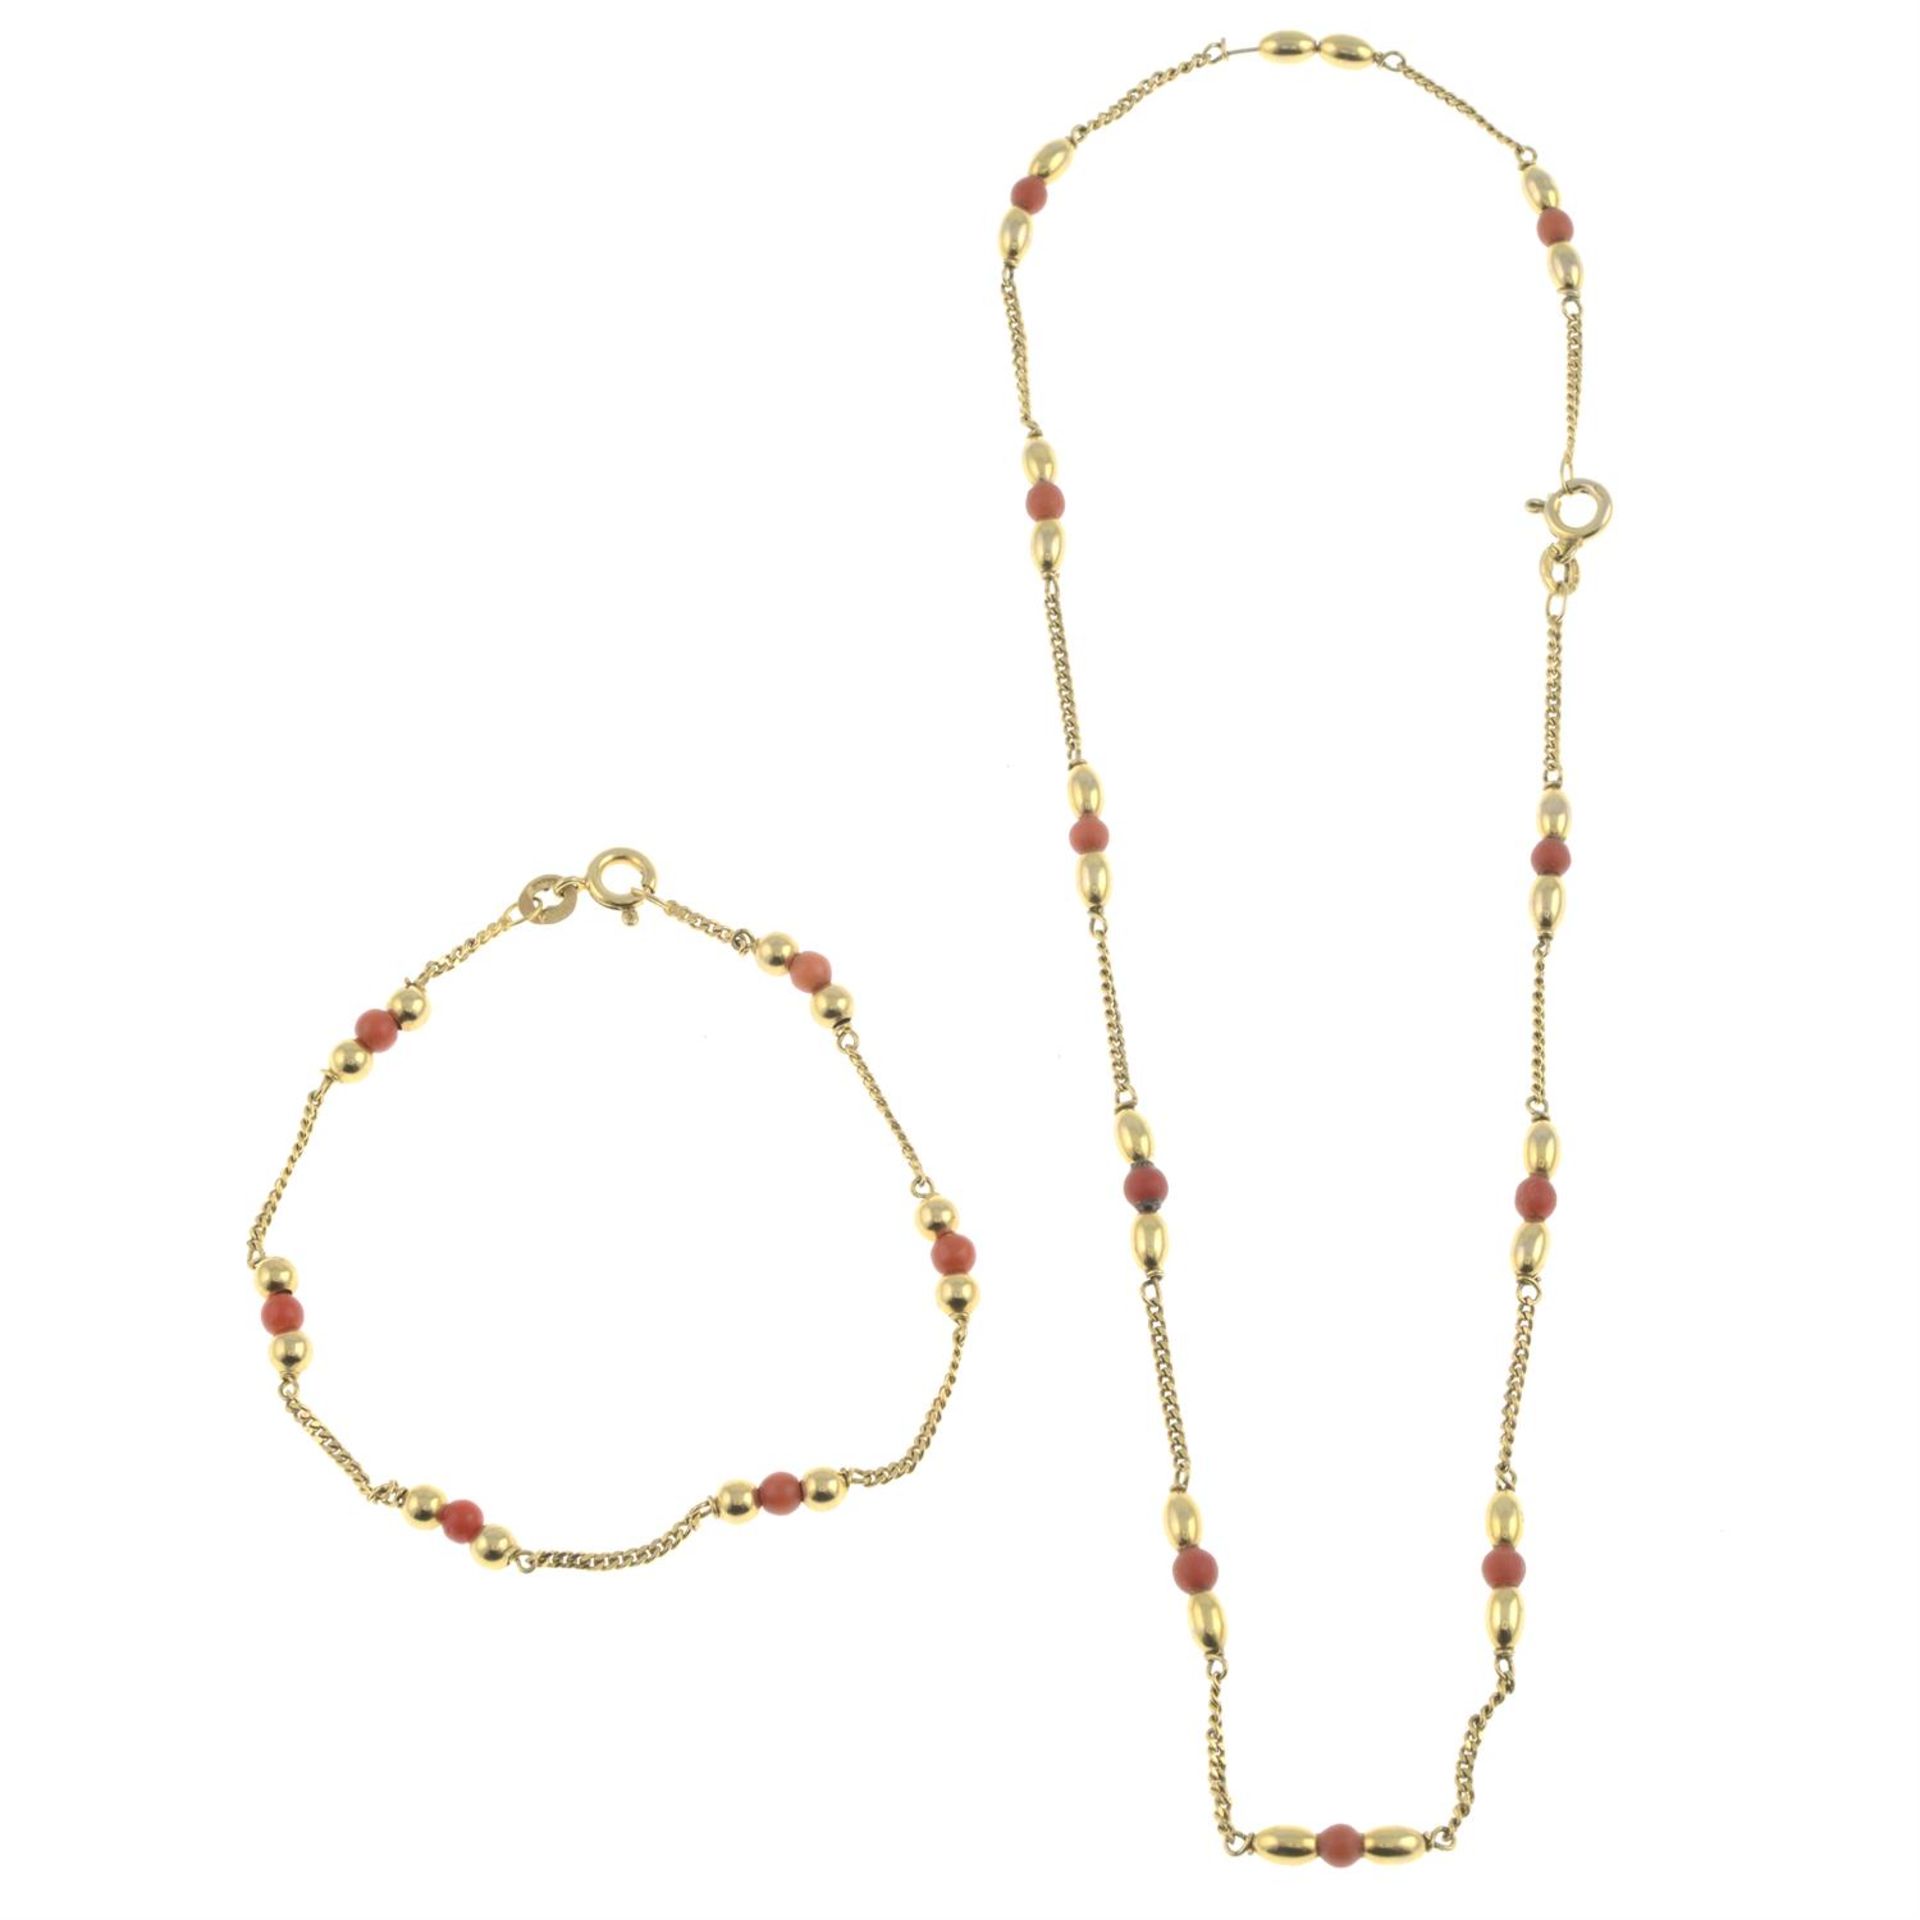 9ct gold coral necklace & bracelet